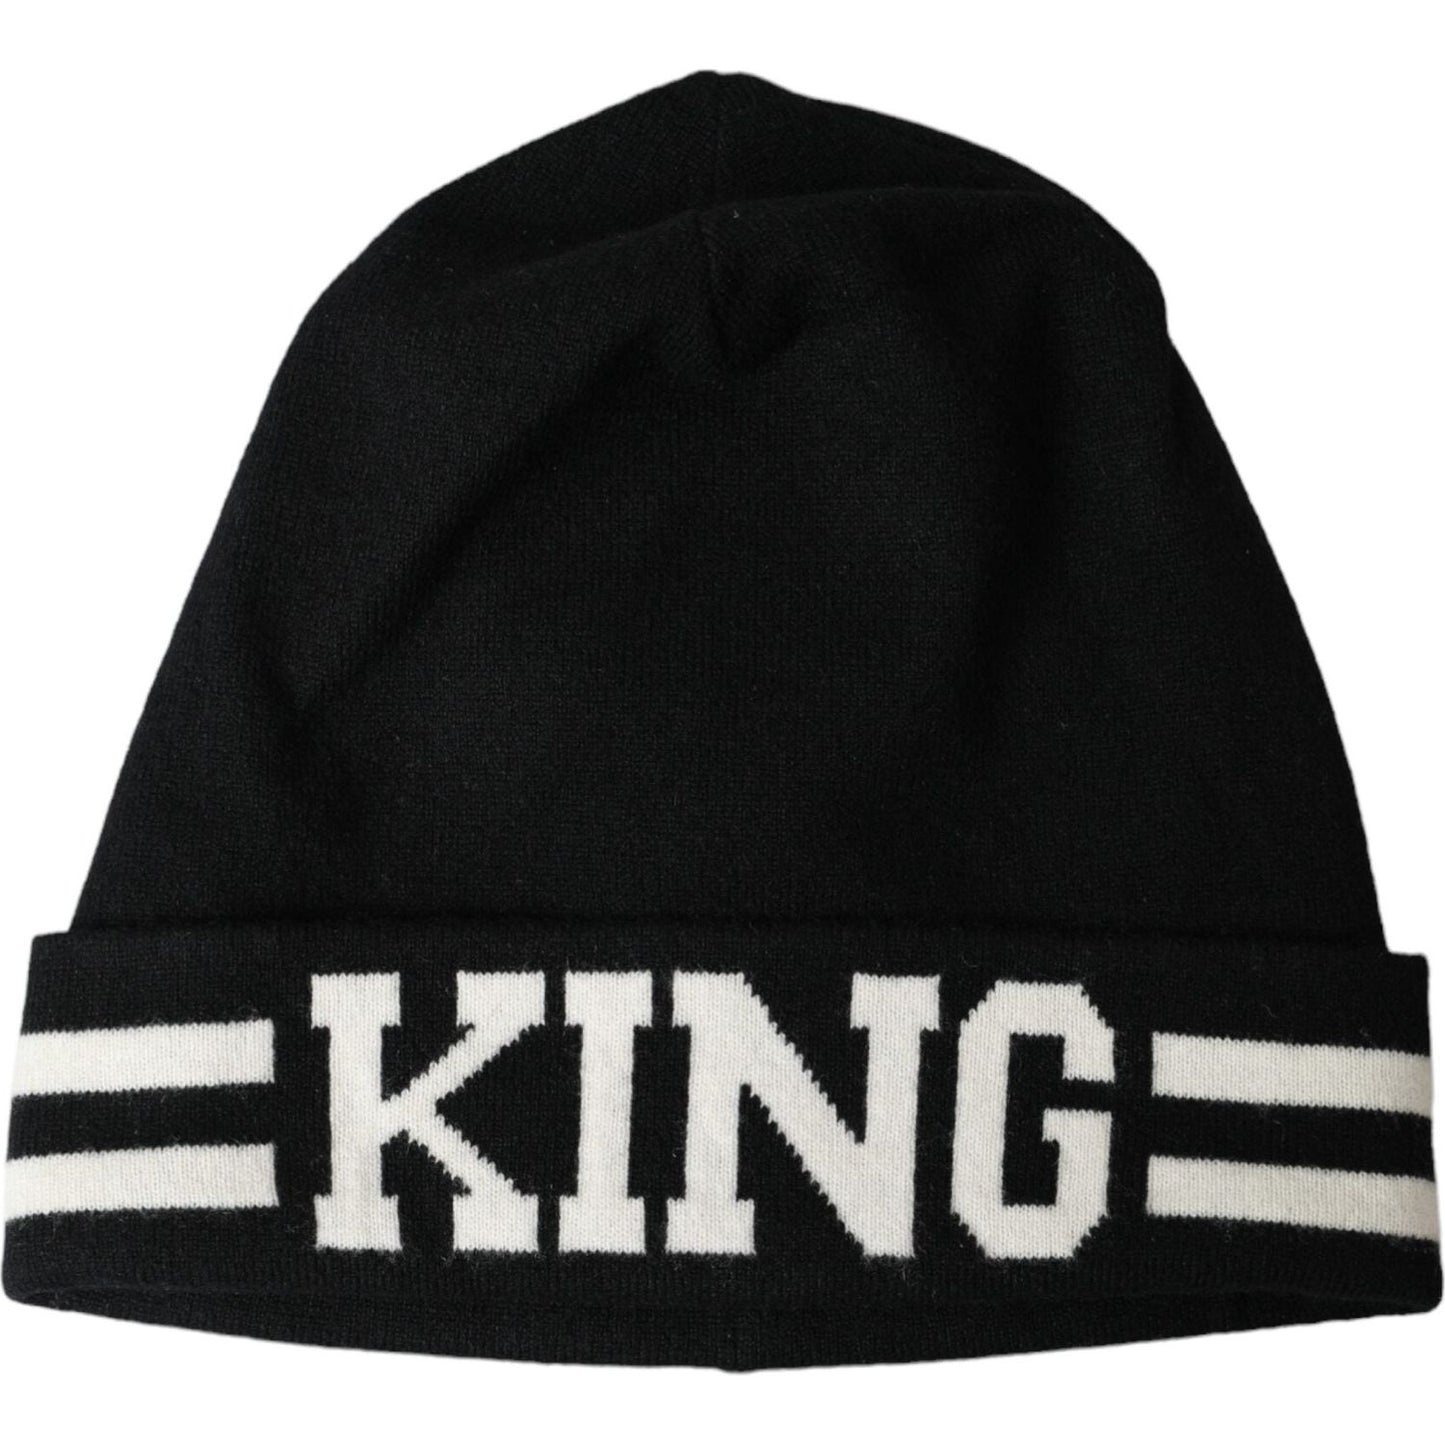 Black White Cashmere DG King Winter Beanie Hat